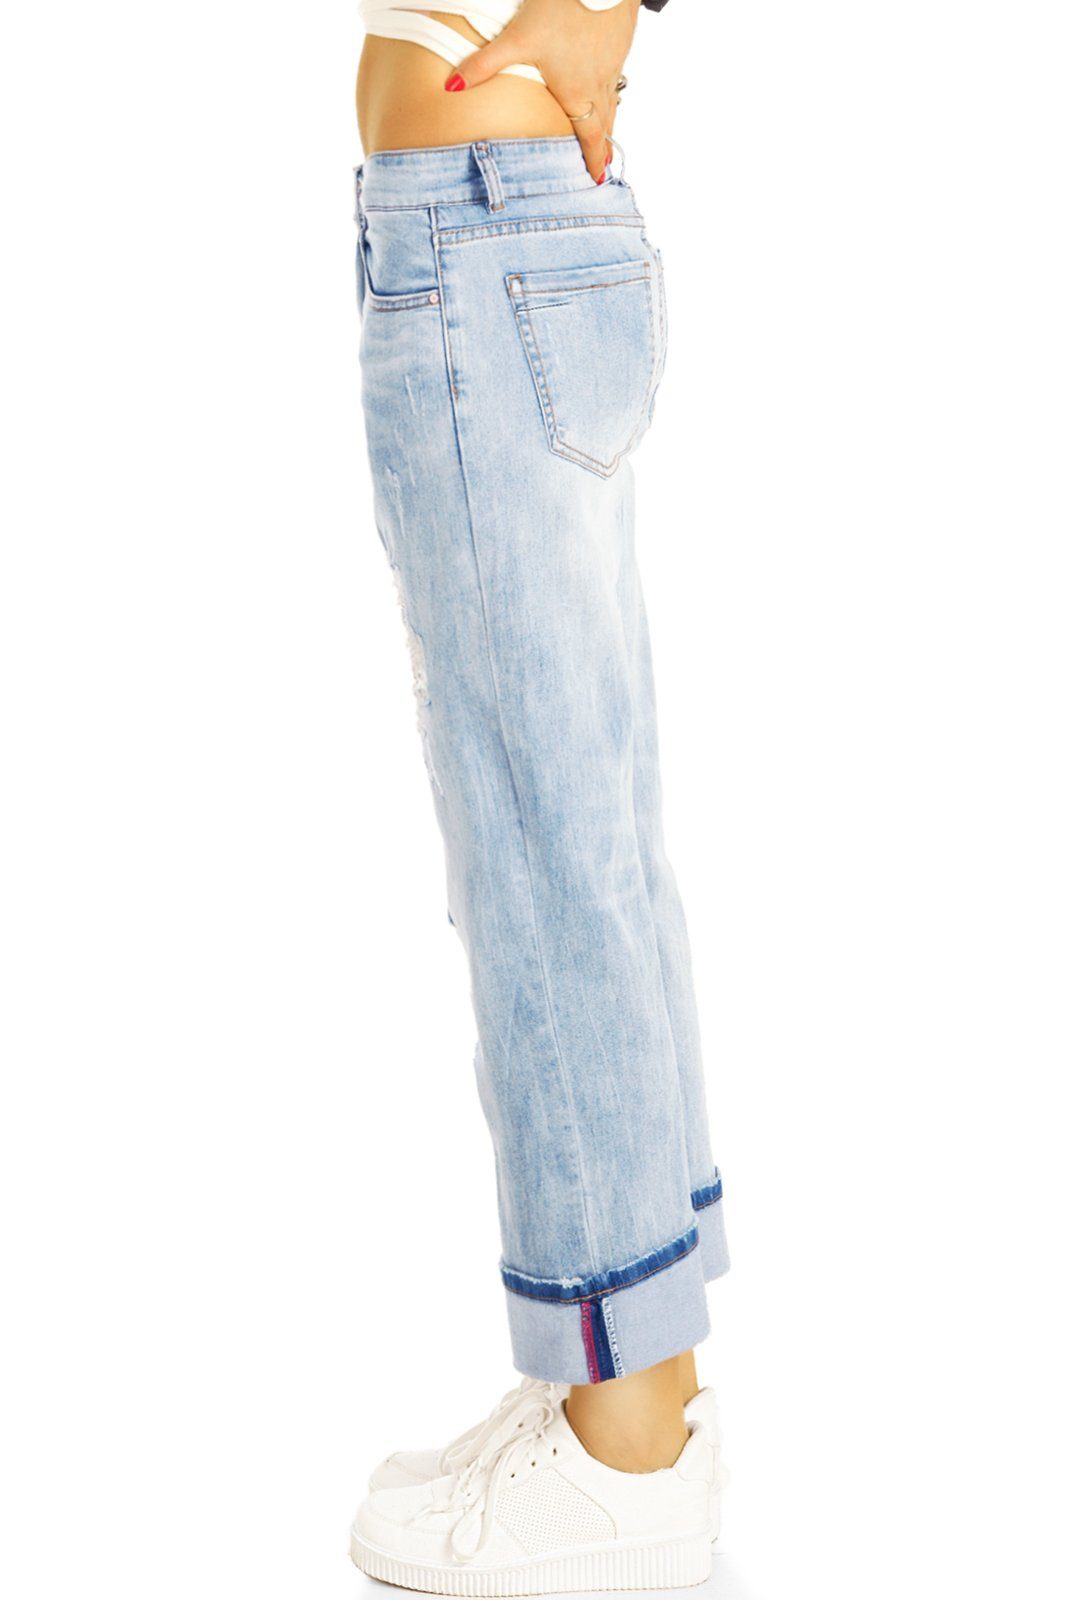 - styled 5-Pocket-Style Jeans Stretch-Anteil, Destroyed Boyfriend j33L-2 Damen mit be - Medium 7/8 Mom 7/8-Jeans waist